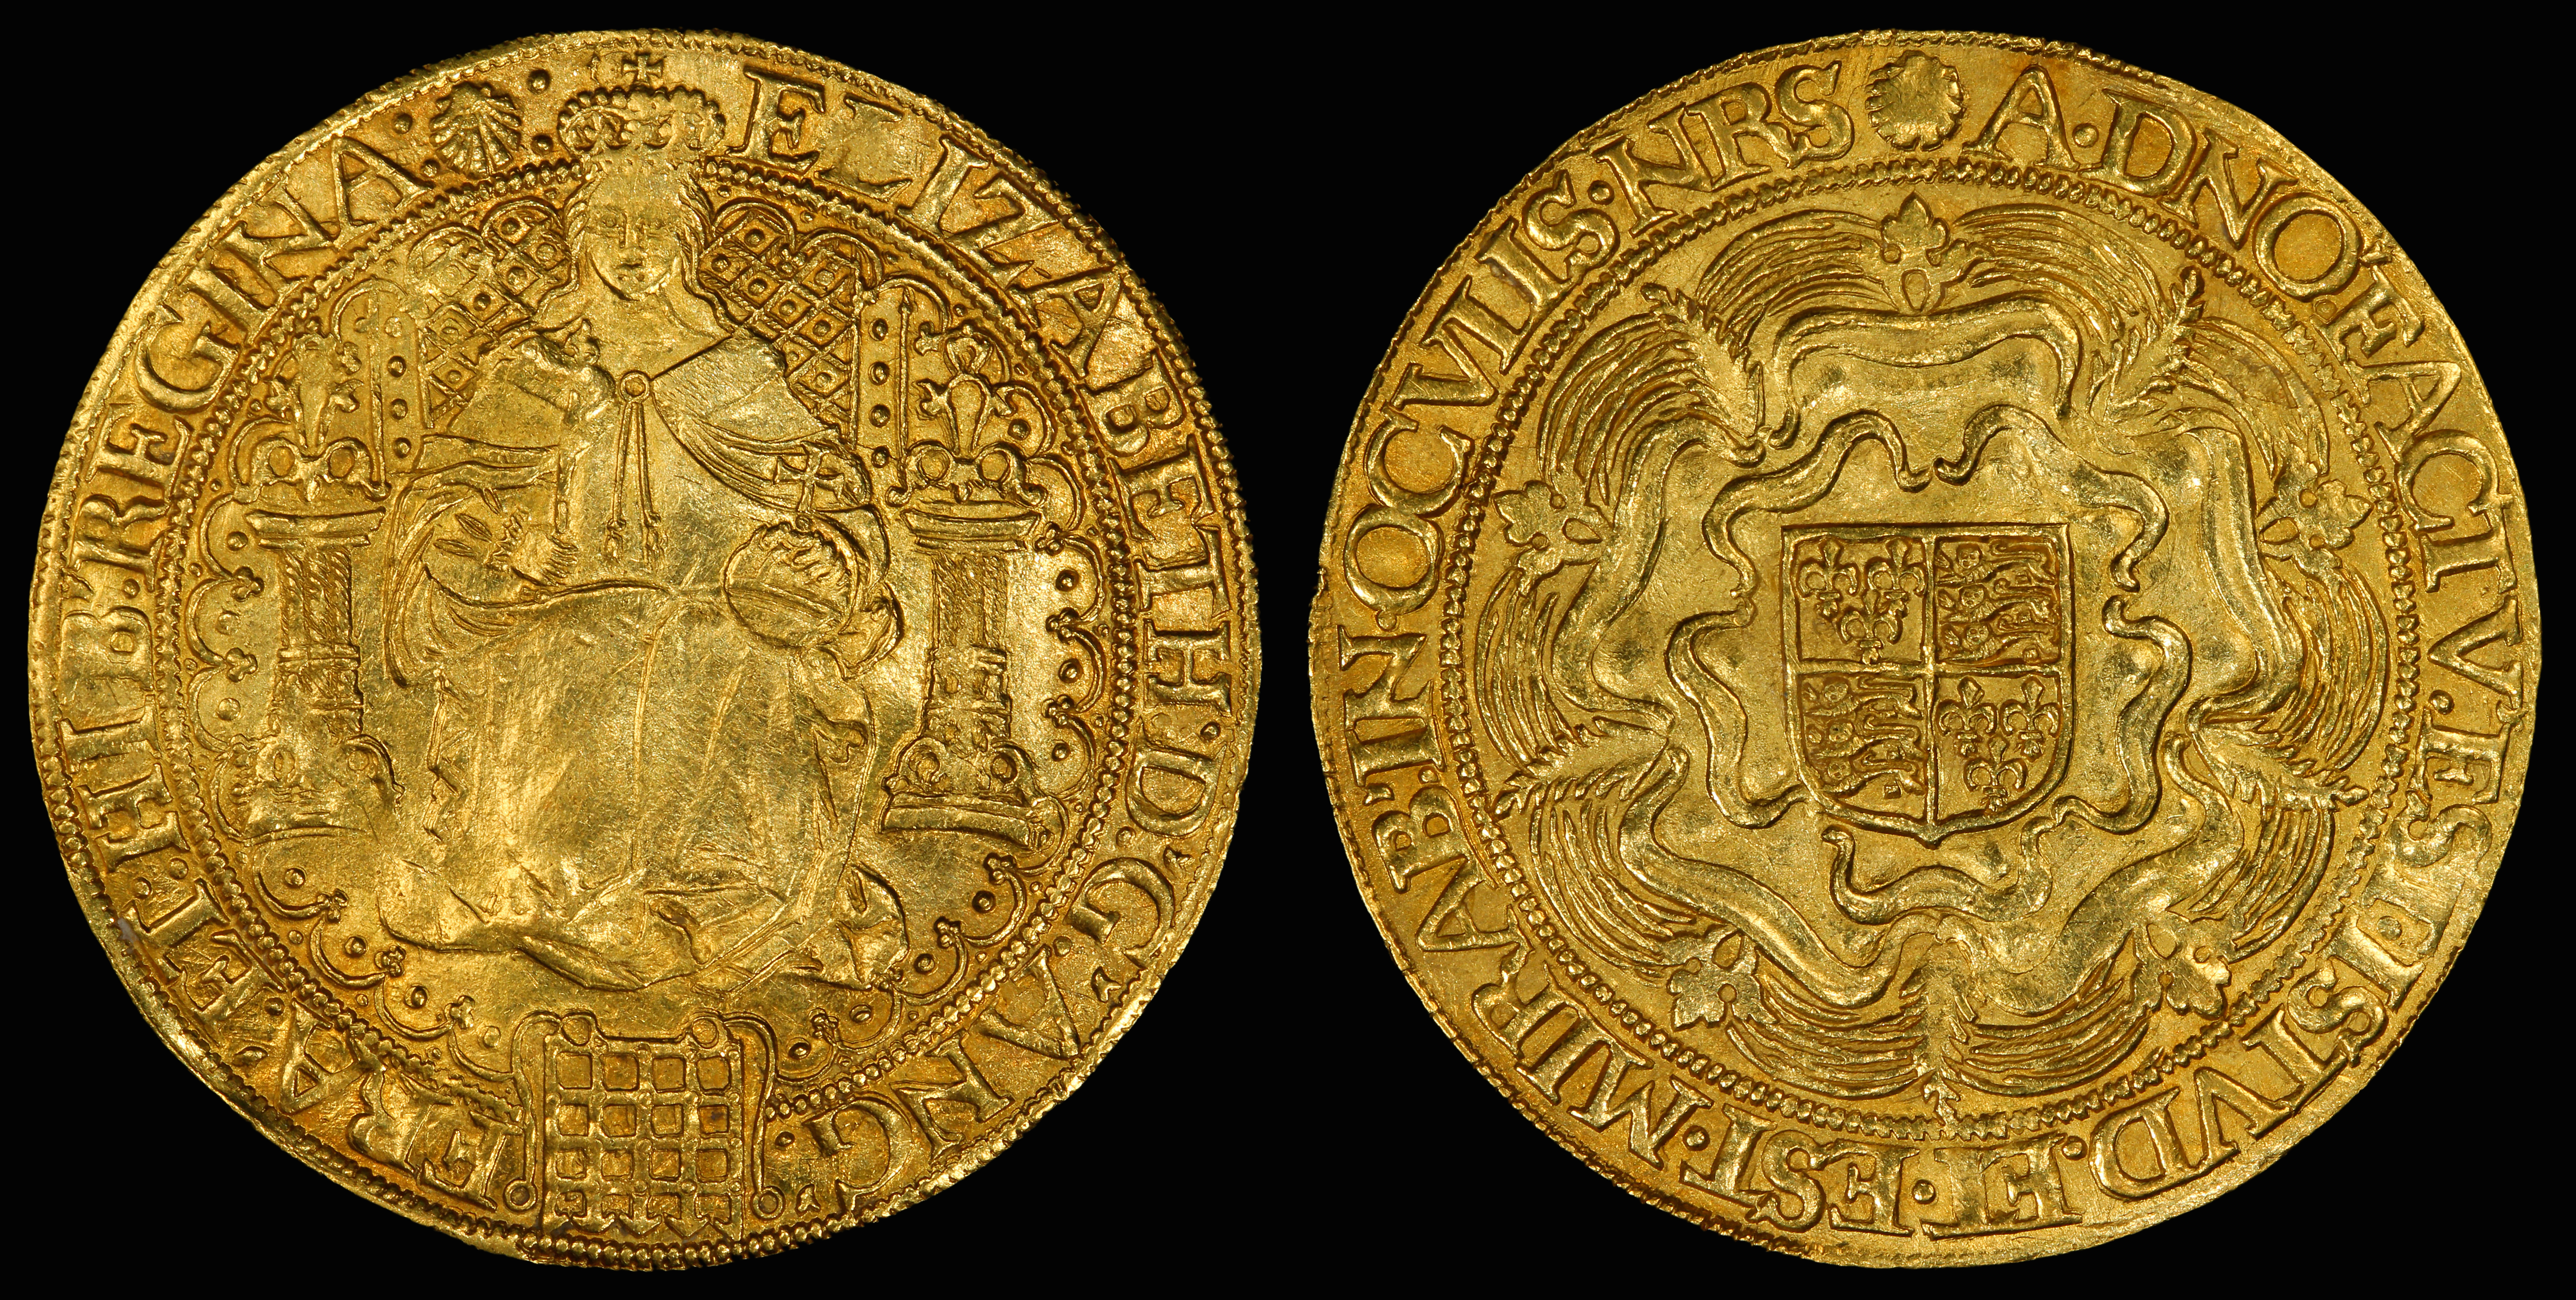 British sovereign gold coin